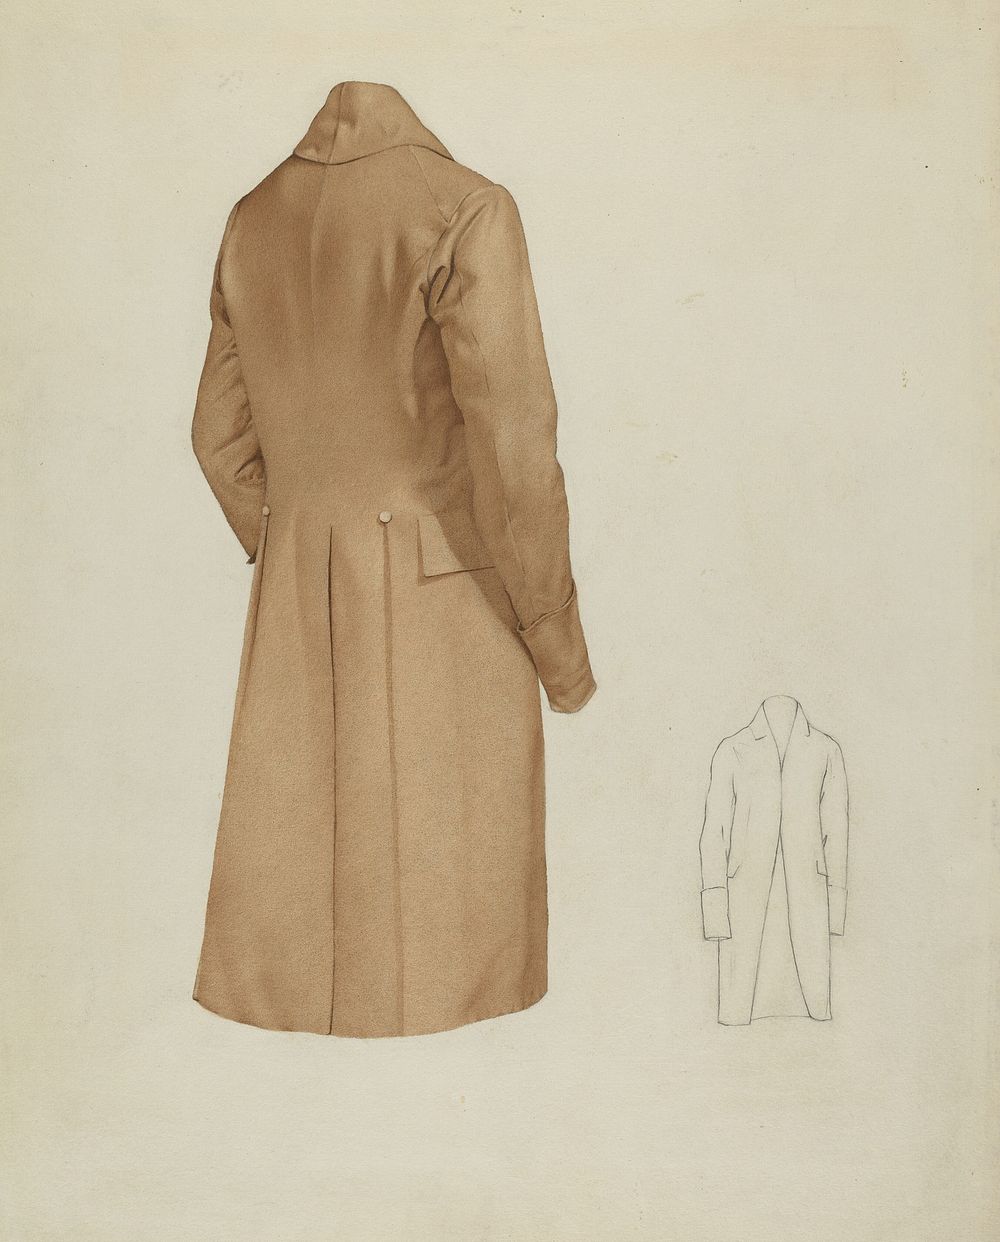 Shaker Man's Coat (c. 1936) by Joseph Goldberg.  